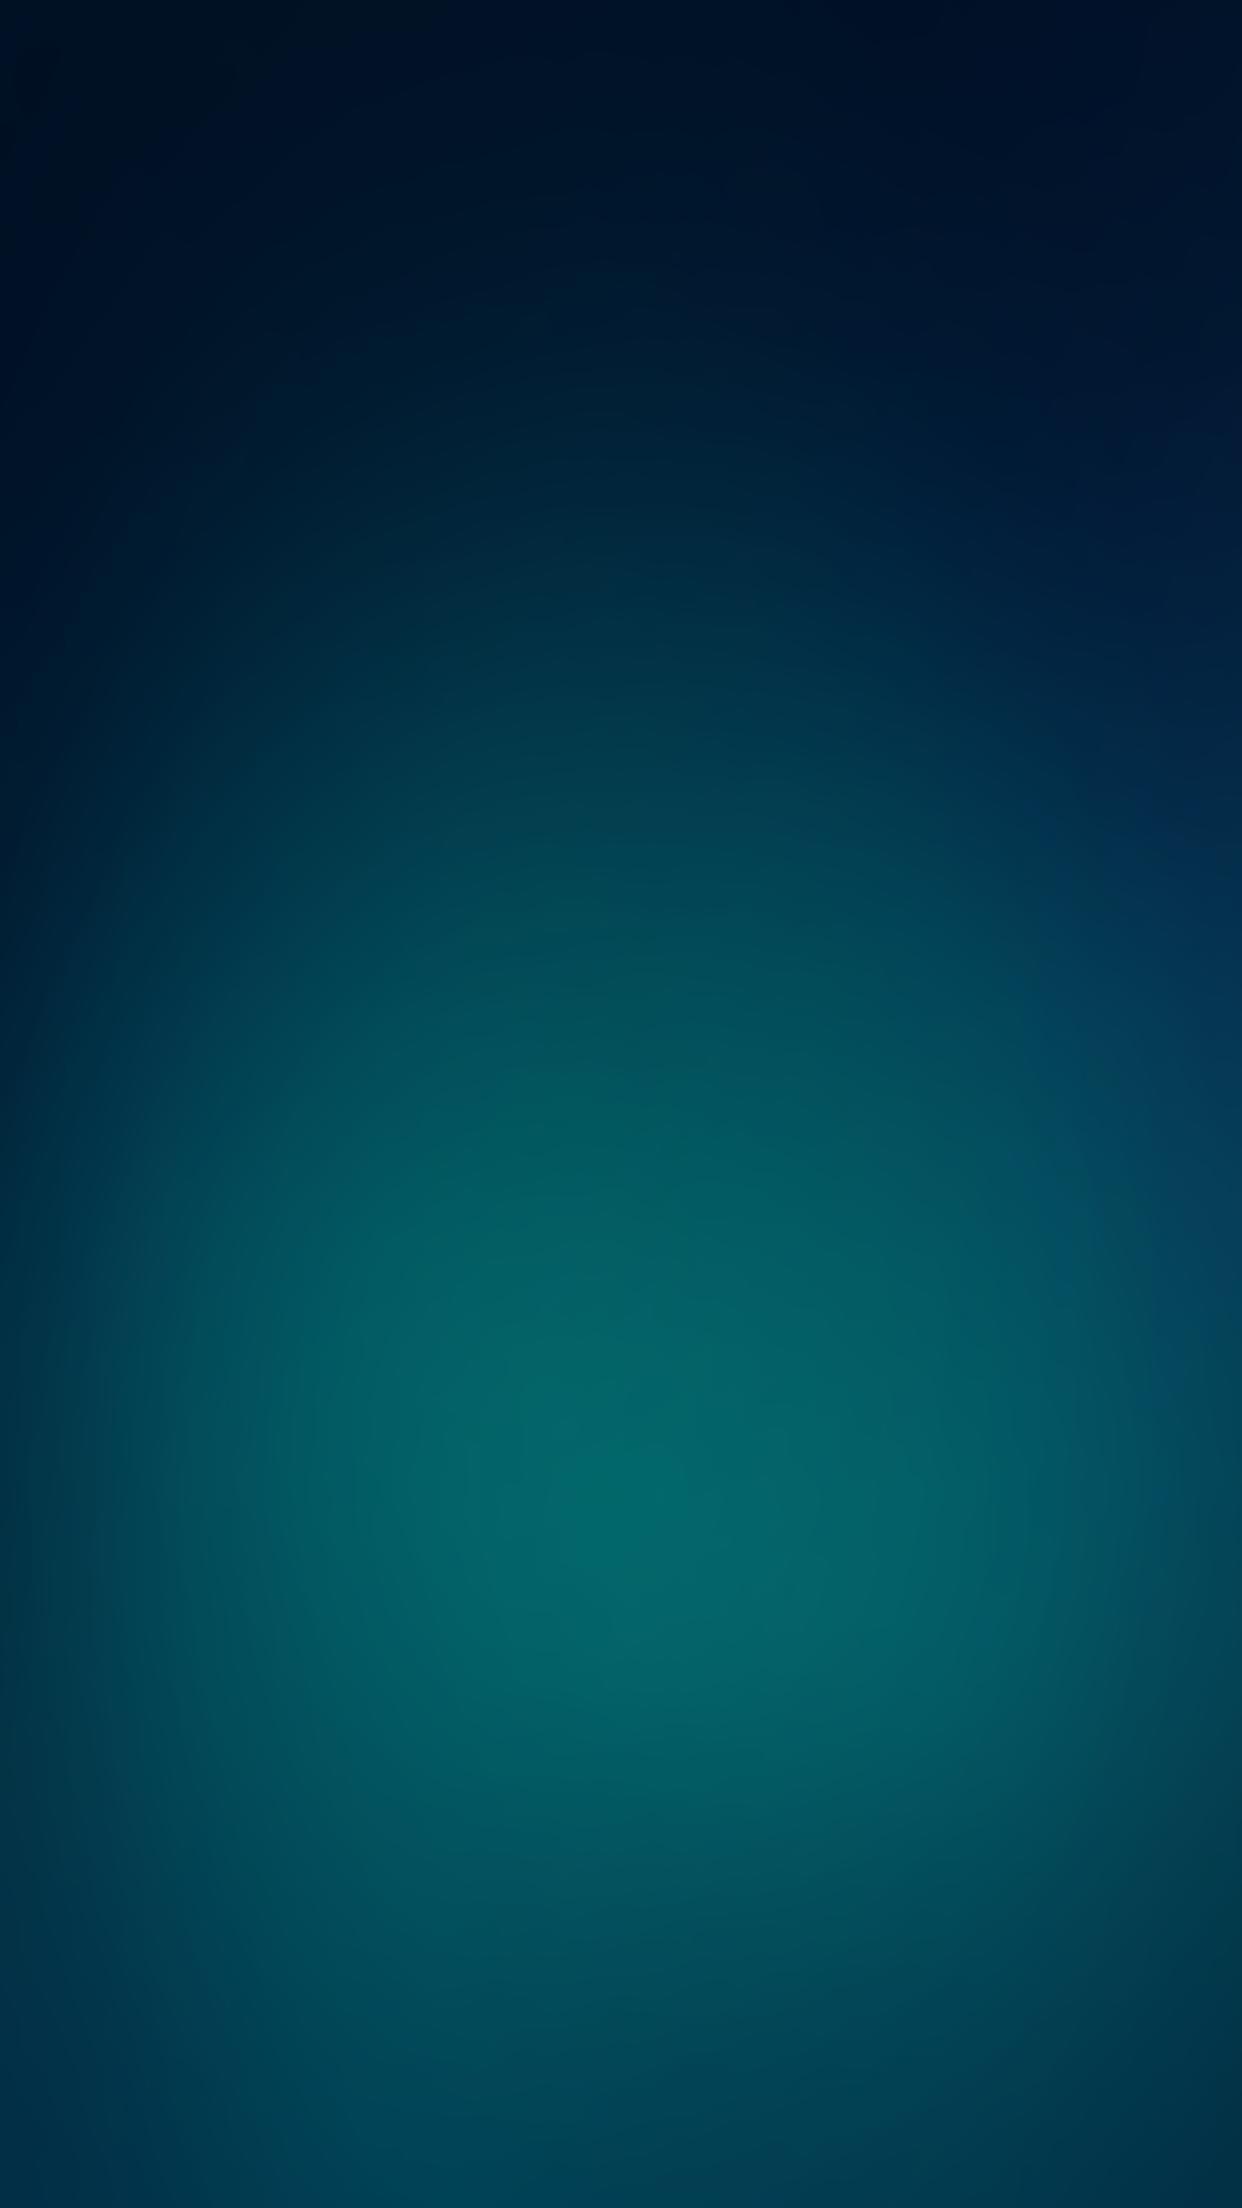 Free Download Iphone 7 Plus Wallpaper 1242x2208 For Your Desktop Mobile Tablet Explore 56 Blue Iphone 7 Plus Wallpaper Blue Iphone 7 Plus Wallpaper Iphone 7 Plus Wallpaper Iphone 7 Plus Wallpapers